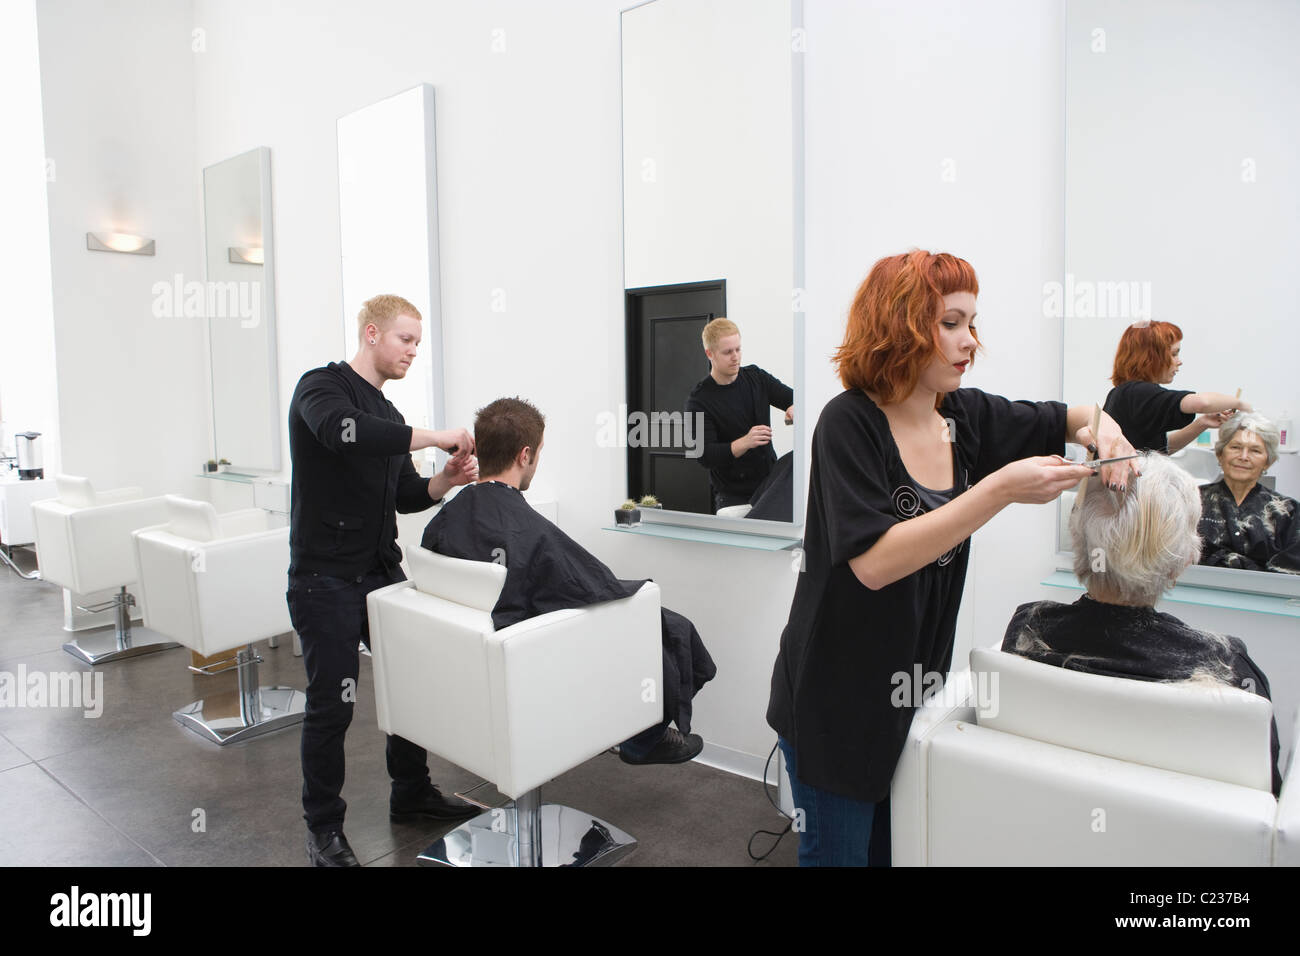 Stylists cut clients' hair in unisex salon Stock Photo